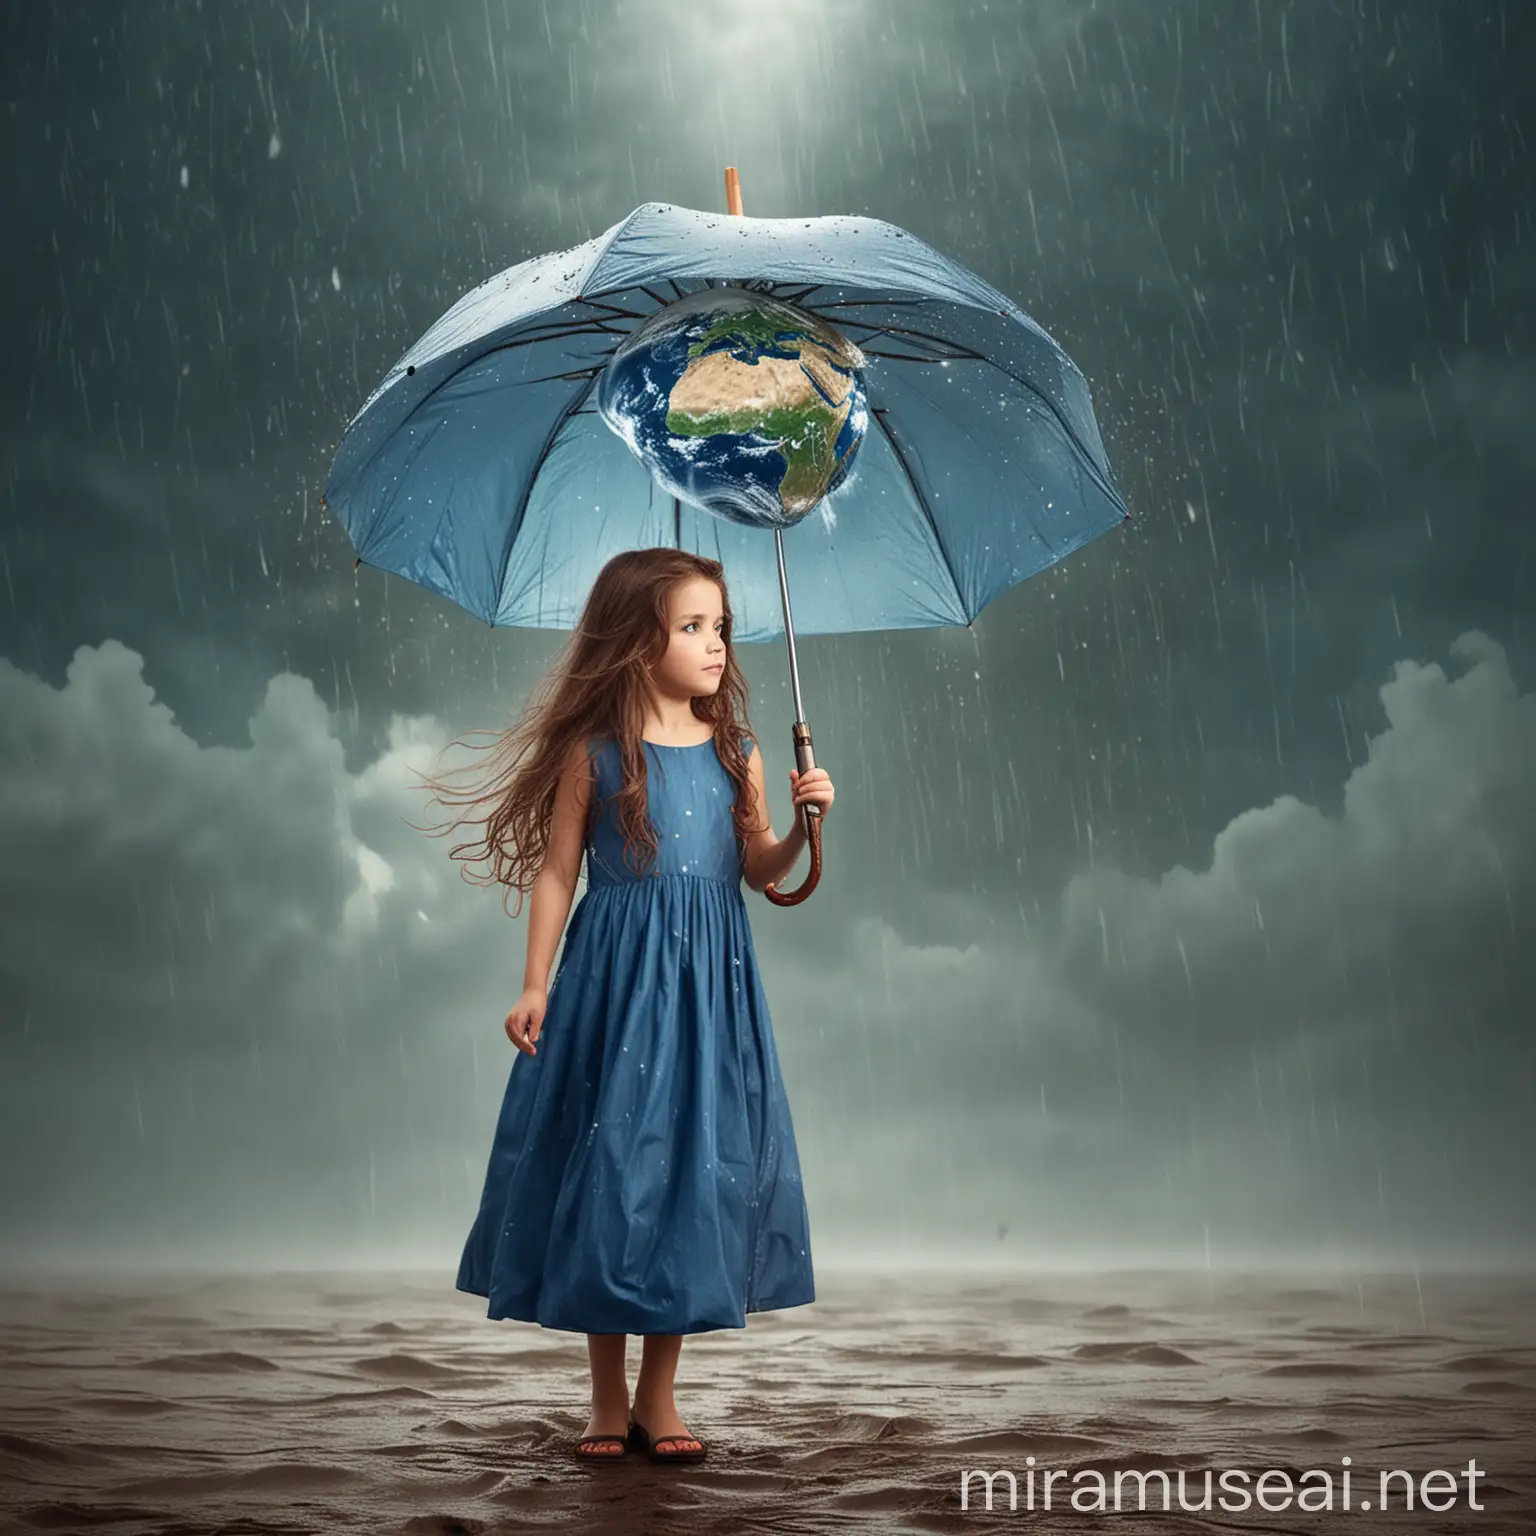 Digital Child Holding Earth Umbrella in Blue Dress